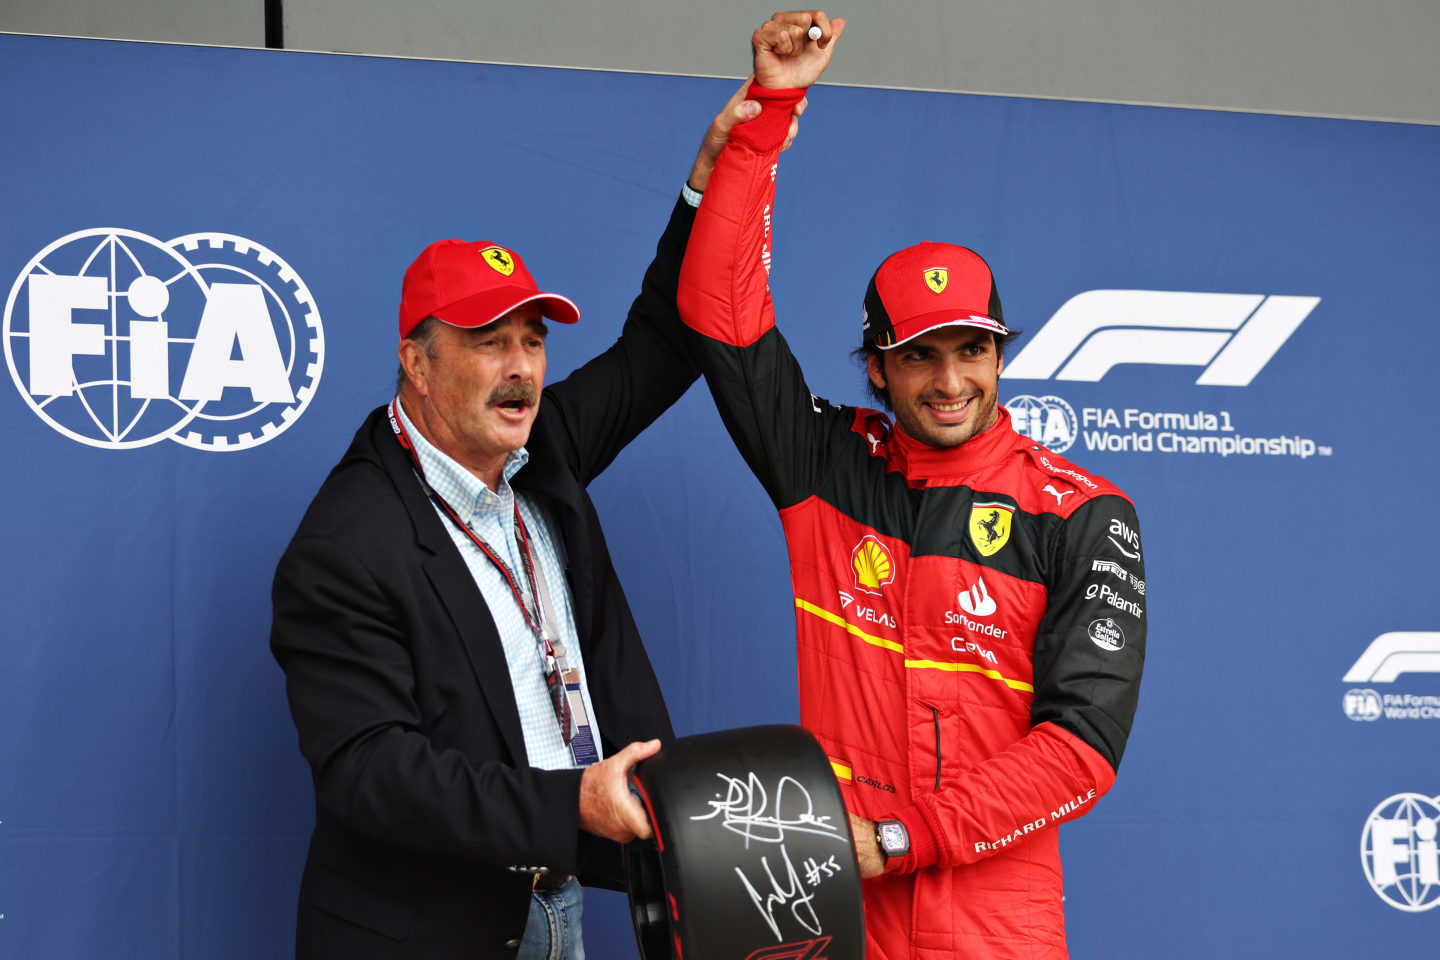 NORTHAMPTON, ENGLAND - JULY 02: Pole position qualifier Carlos Sainz of Spain and Ferrari is